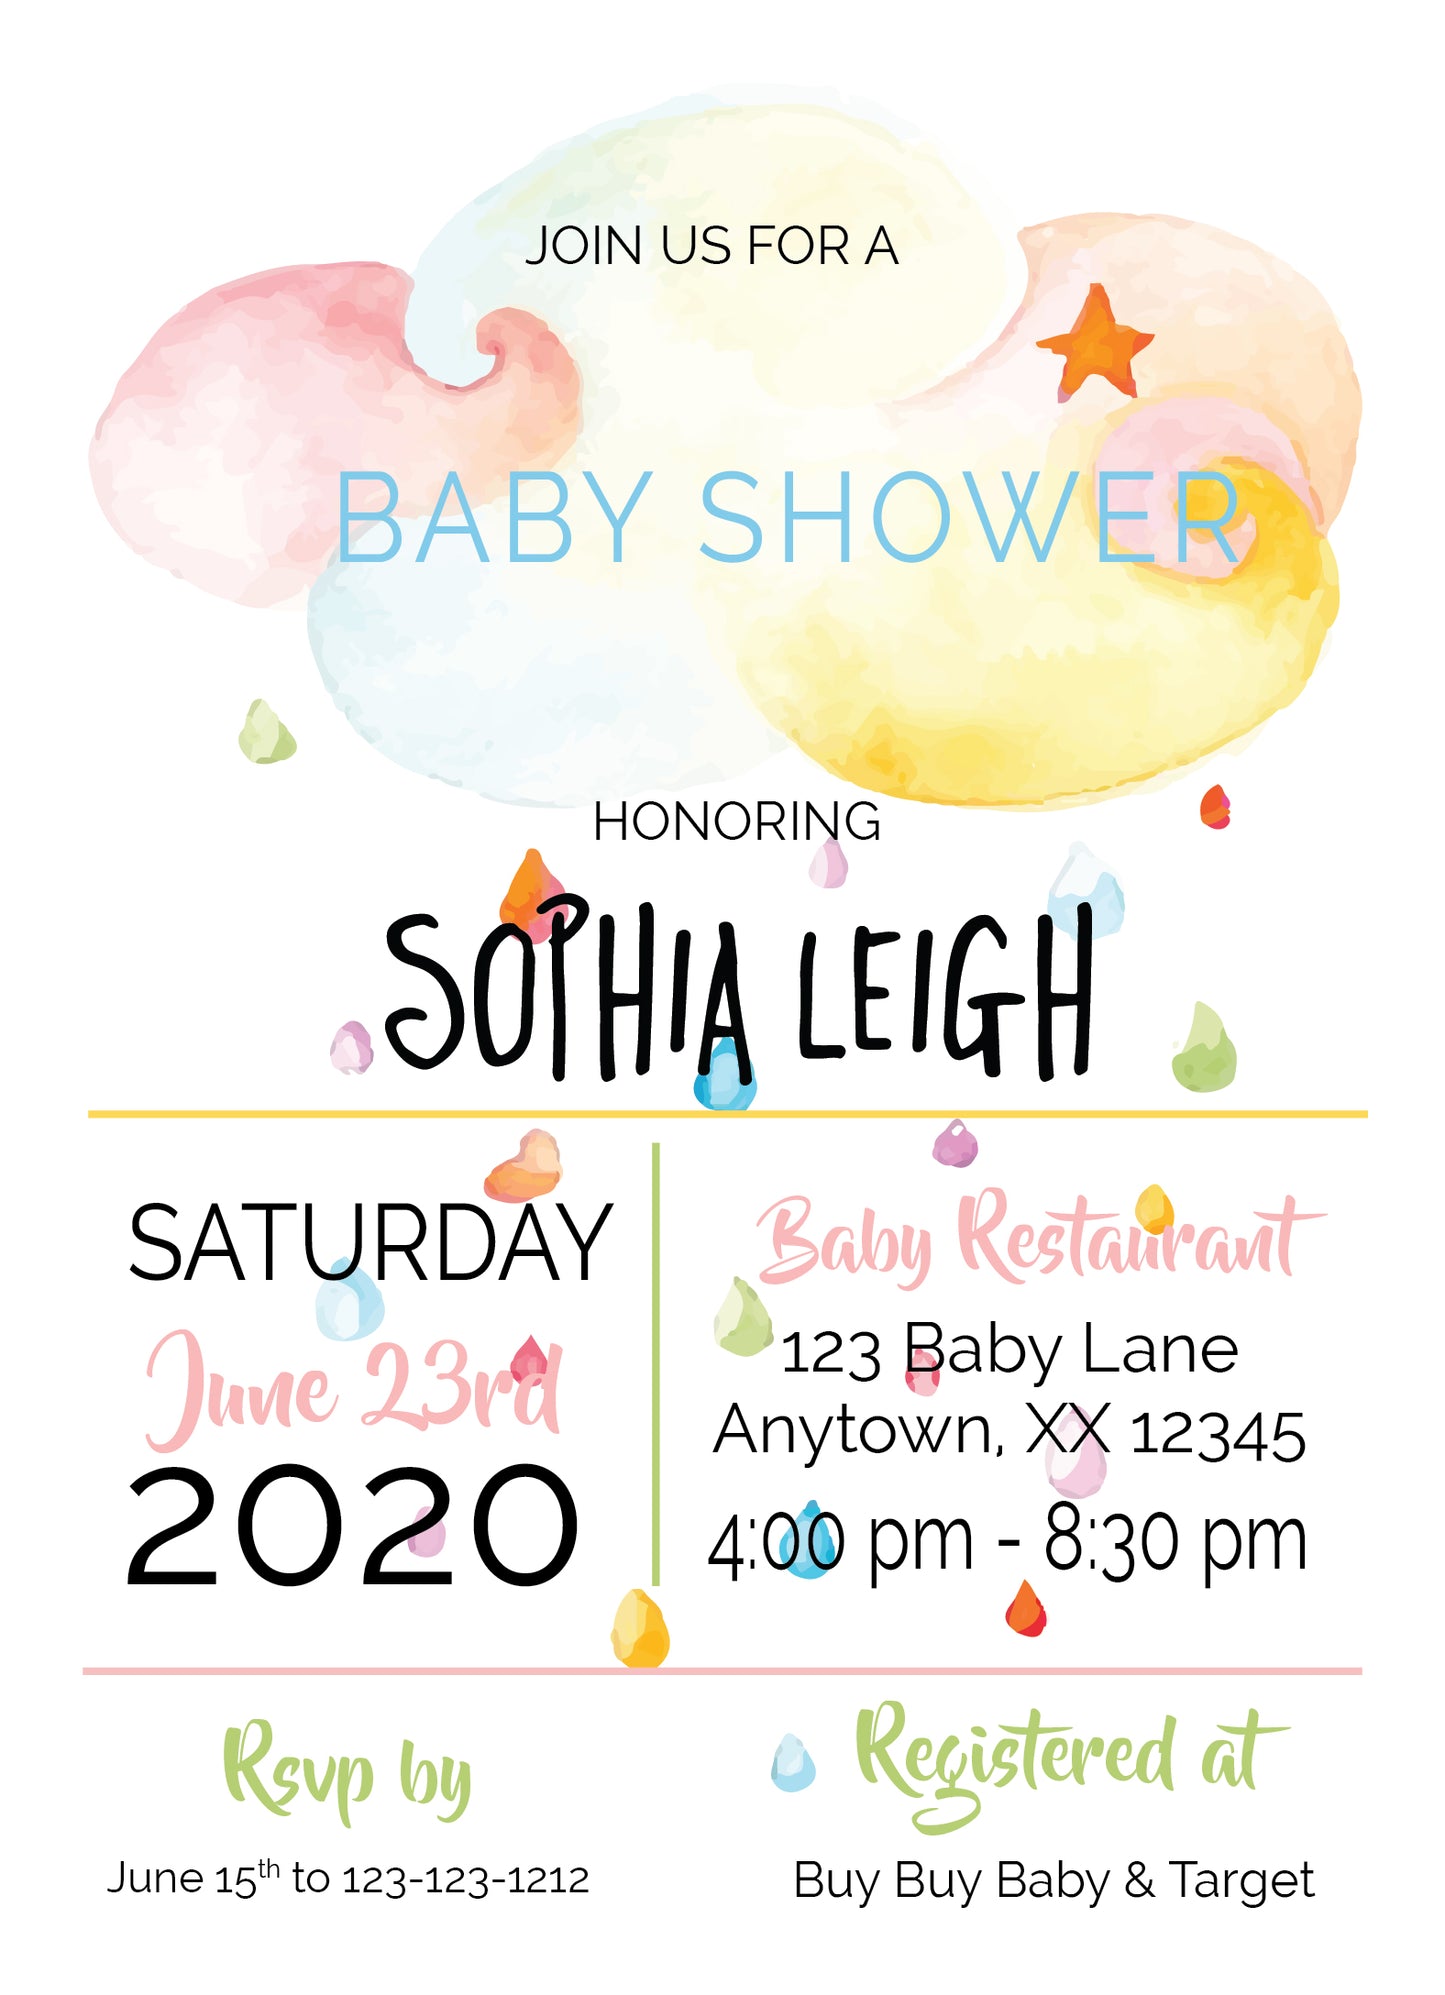 Rainbow cloud Baby Shower Invitations - Invitetique